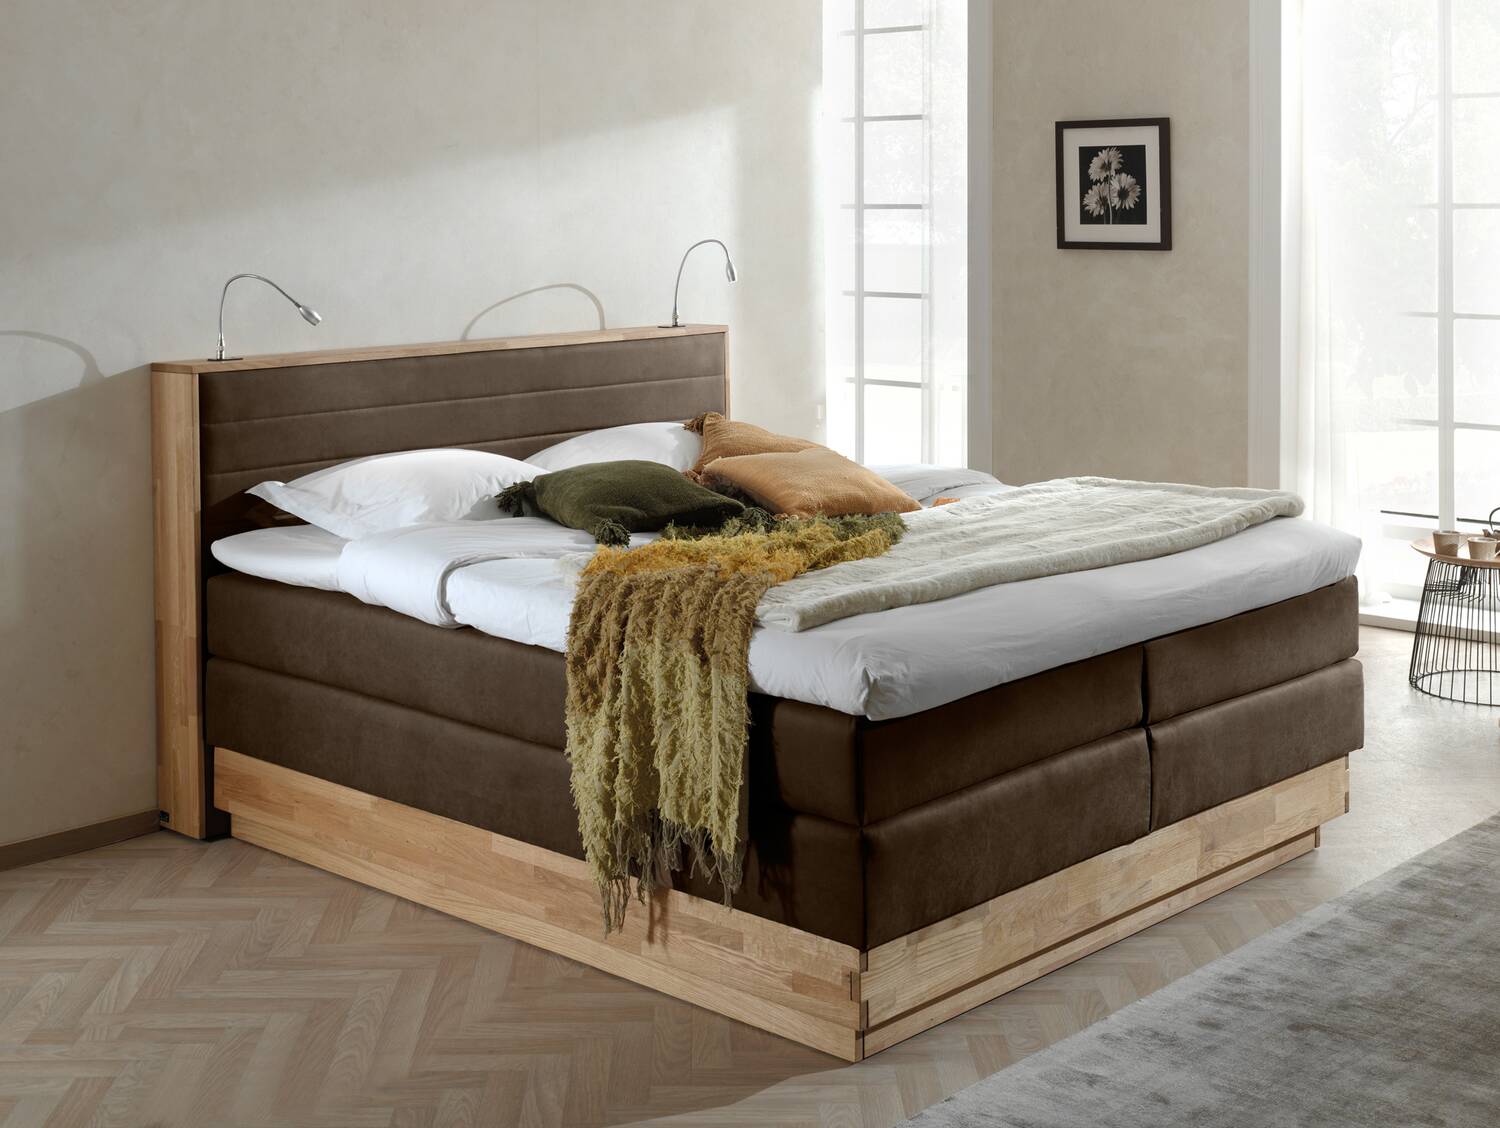 MENOTA Boxspringbett mit Bettkasten, massivem Holzrahmen und Bezug im Vintage Look 160 x 200 cm | braun | Härtegrad 2